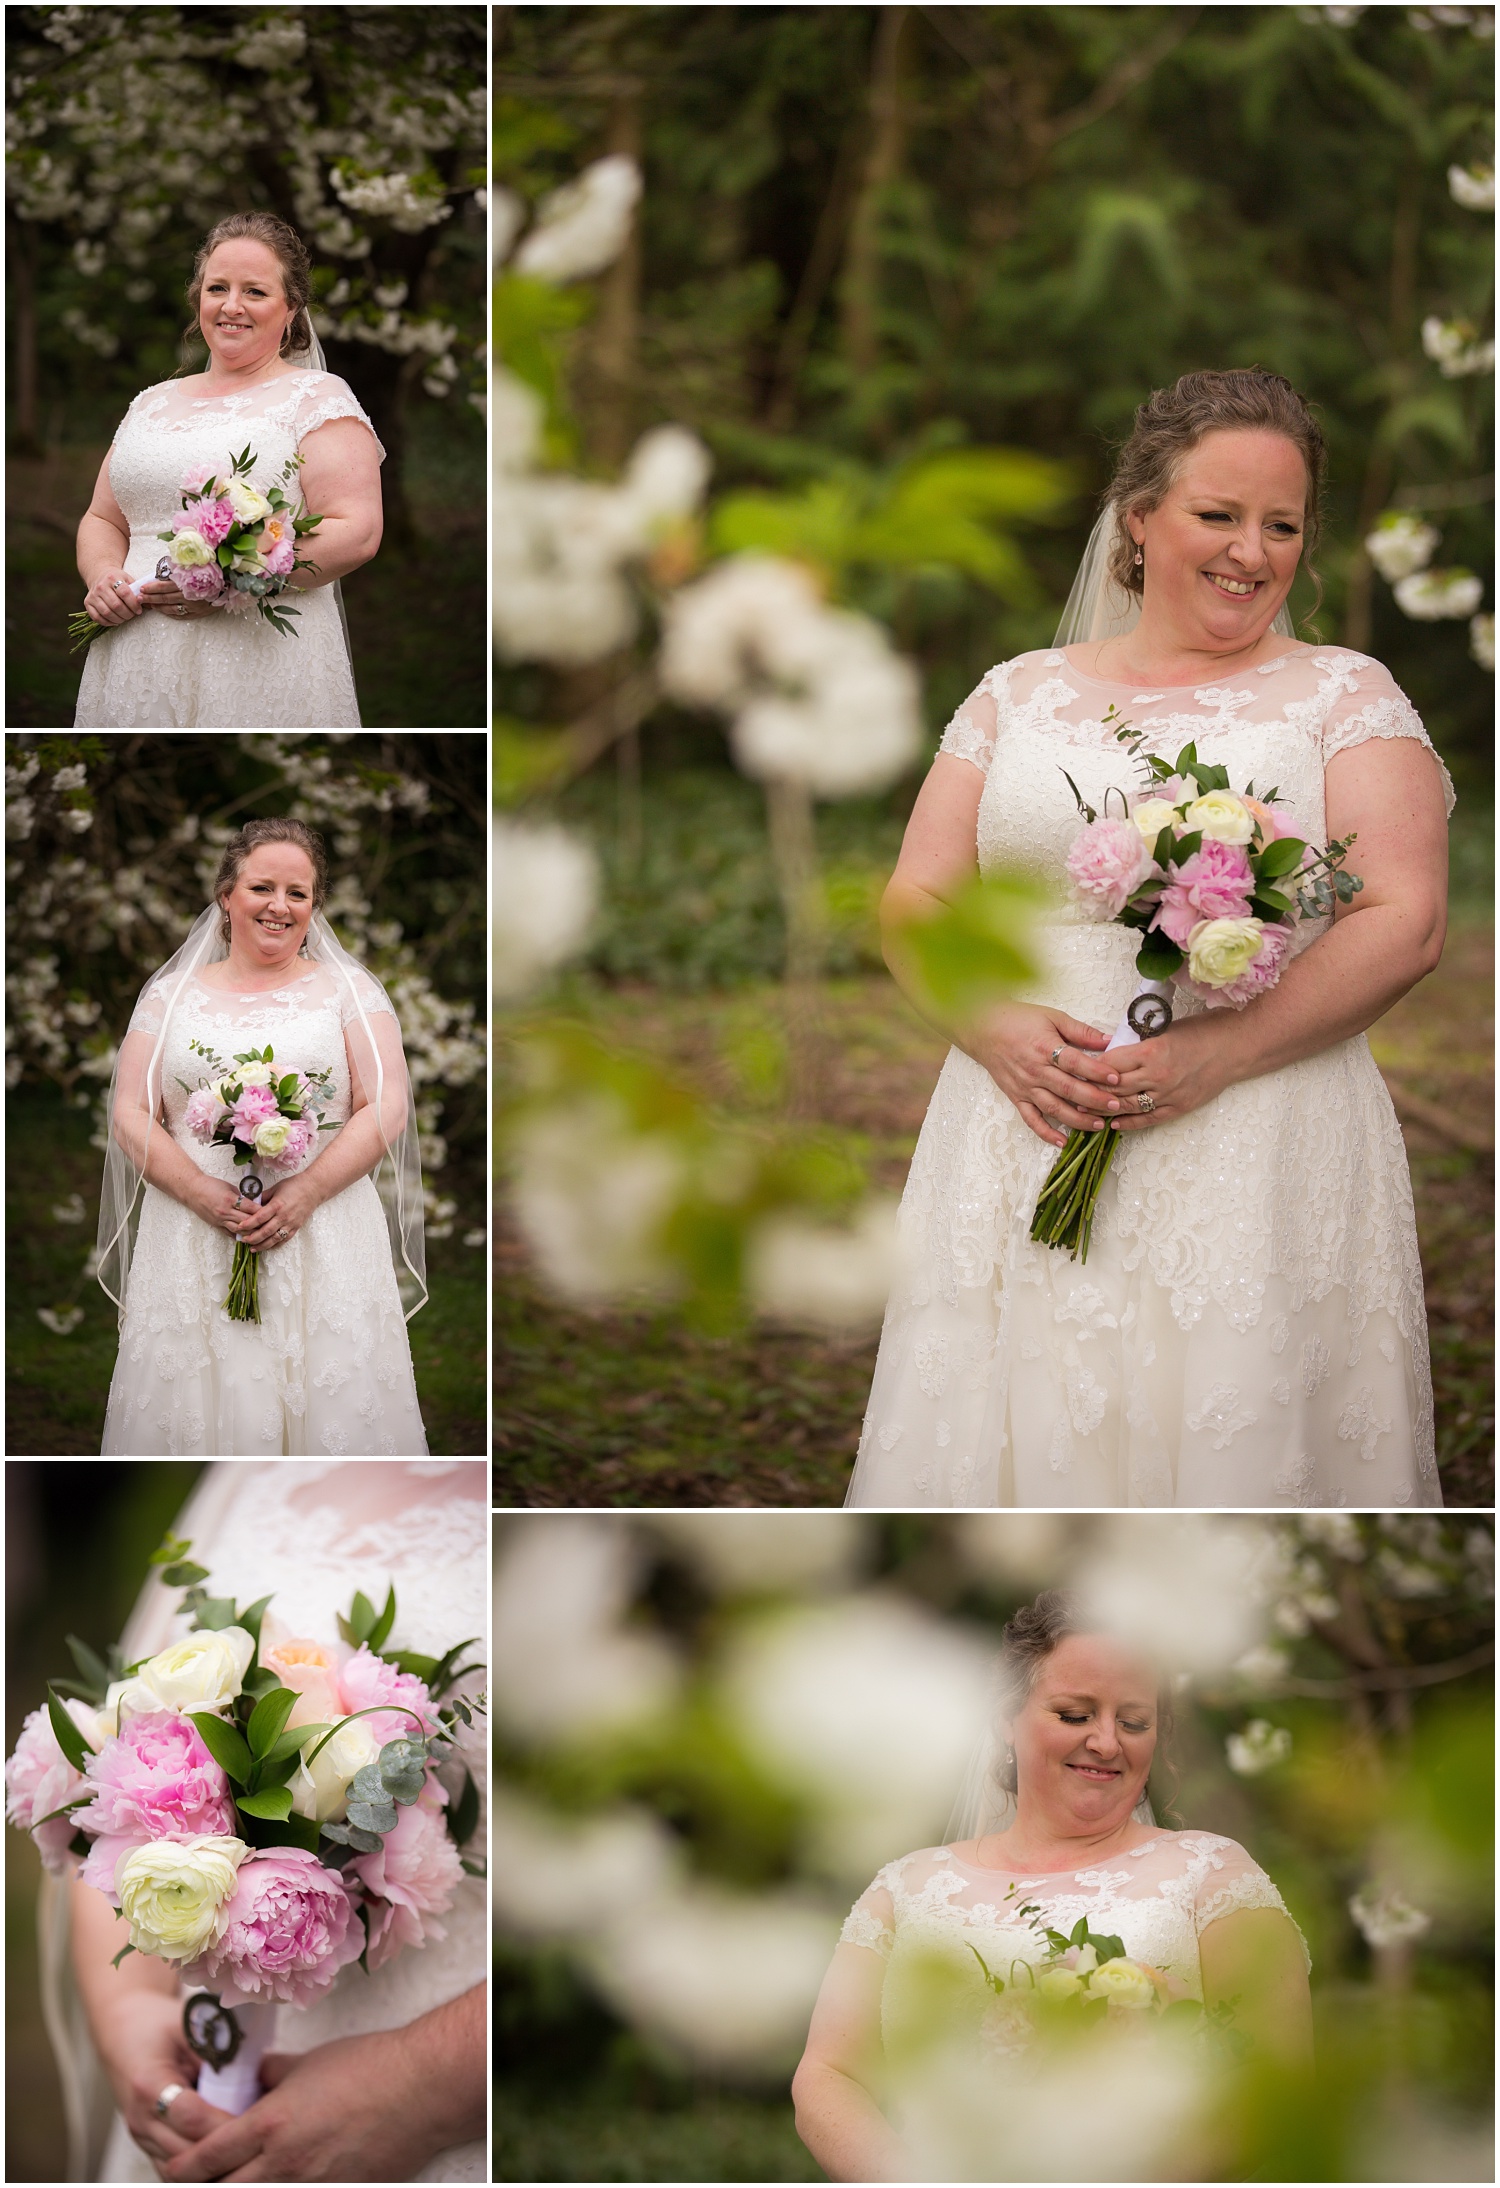 Amazing Day Photography - Hart House Wedding - Deer Lake Park Wedding - Burnaby Wedding Photographer (6).jpg